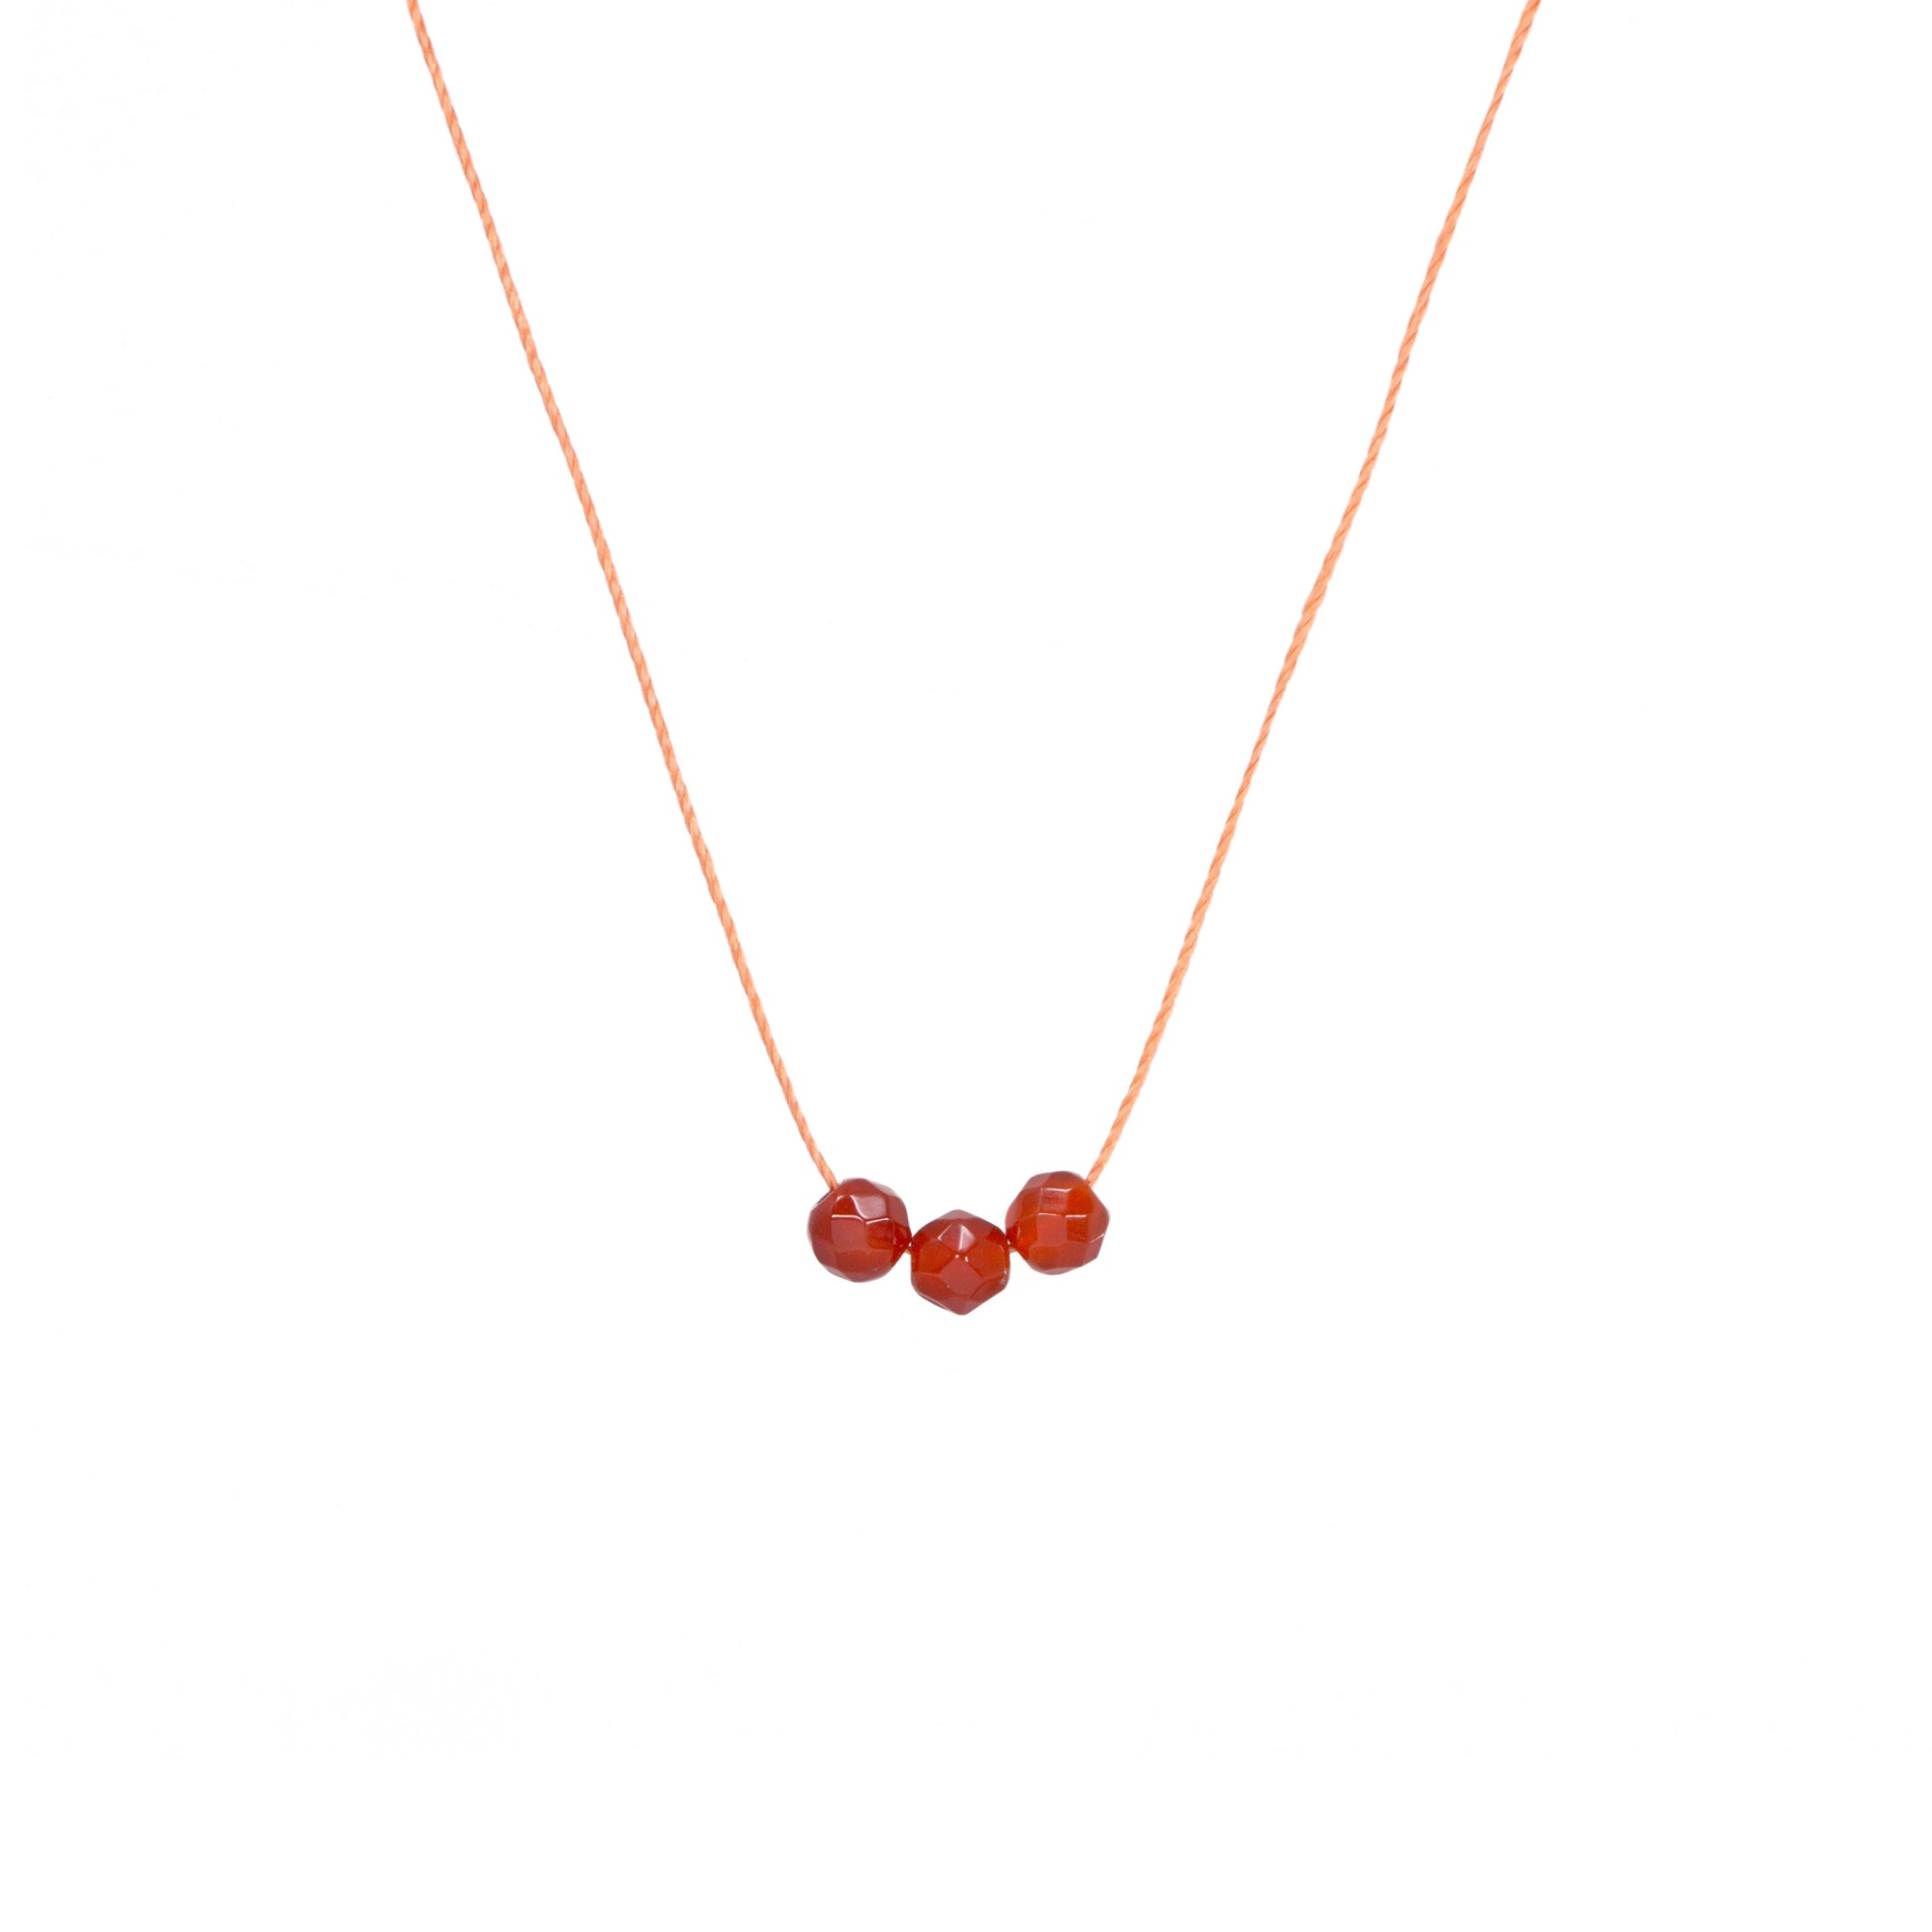 make a wish necklace with carnelian gems